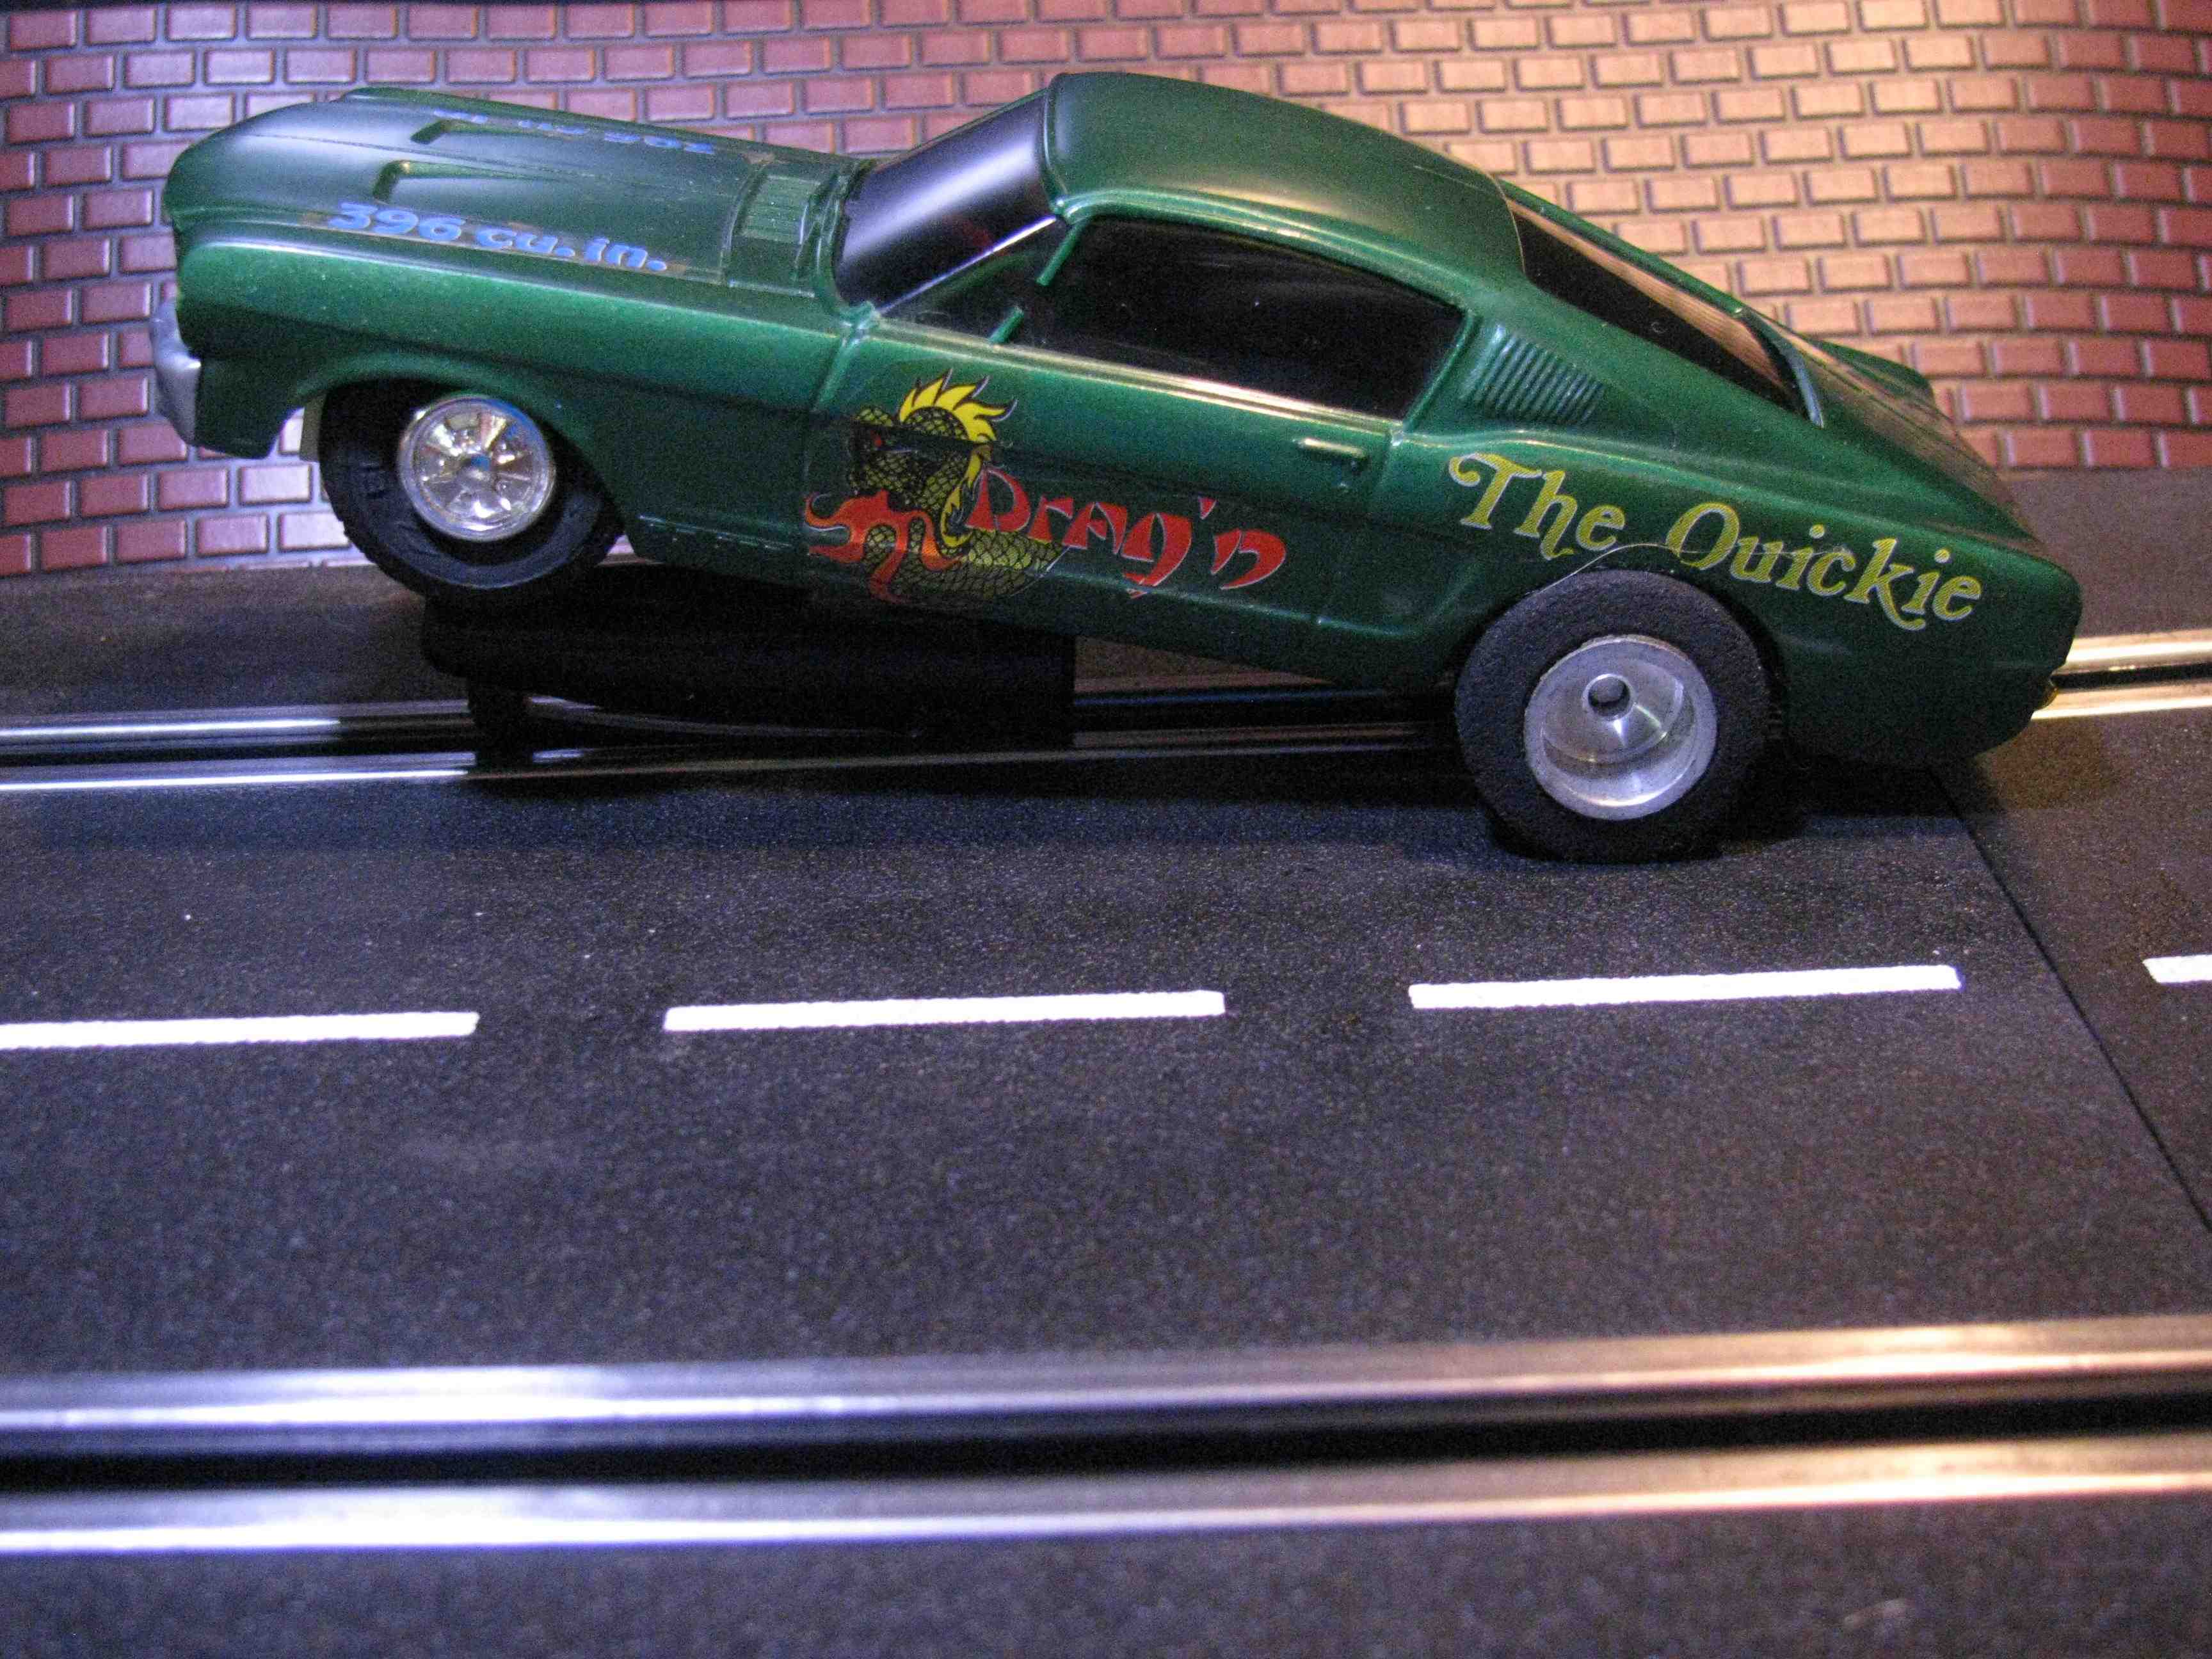 ** SOLD ** 1966 Eldon Mustang GT 350 Drag Car "Drag'n" Slot Car - 1/32 Scale